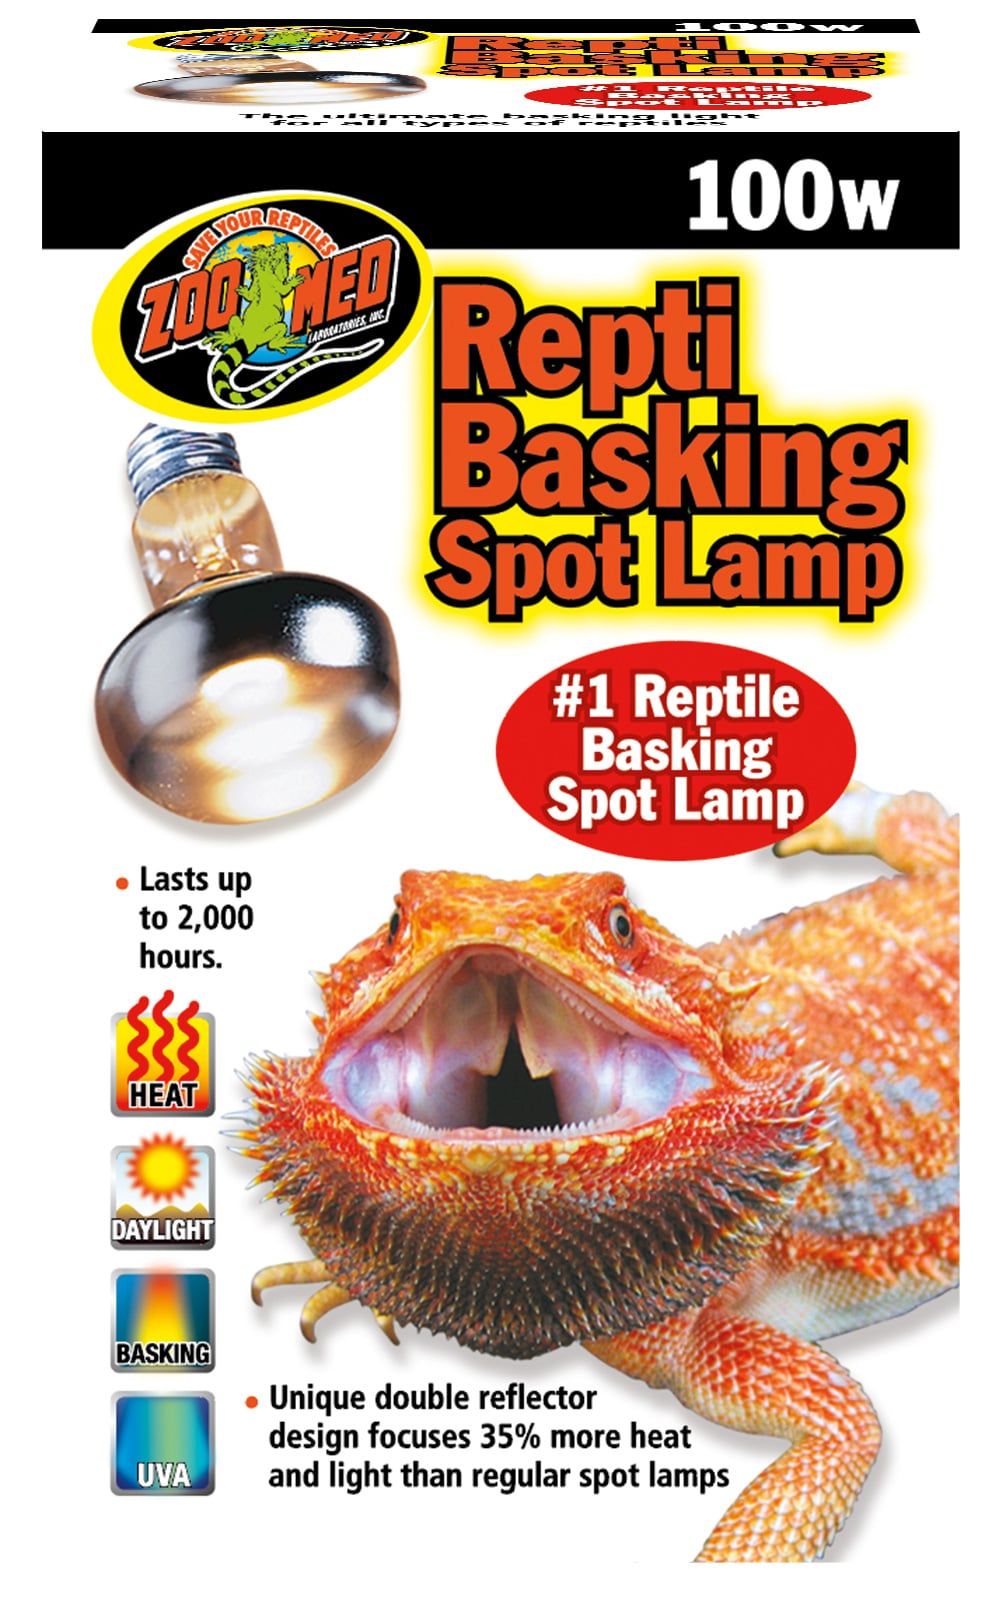 ZooMed Repti Basking Spot Lamp